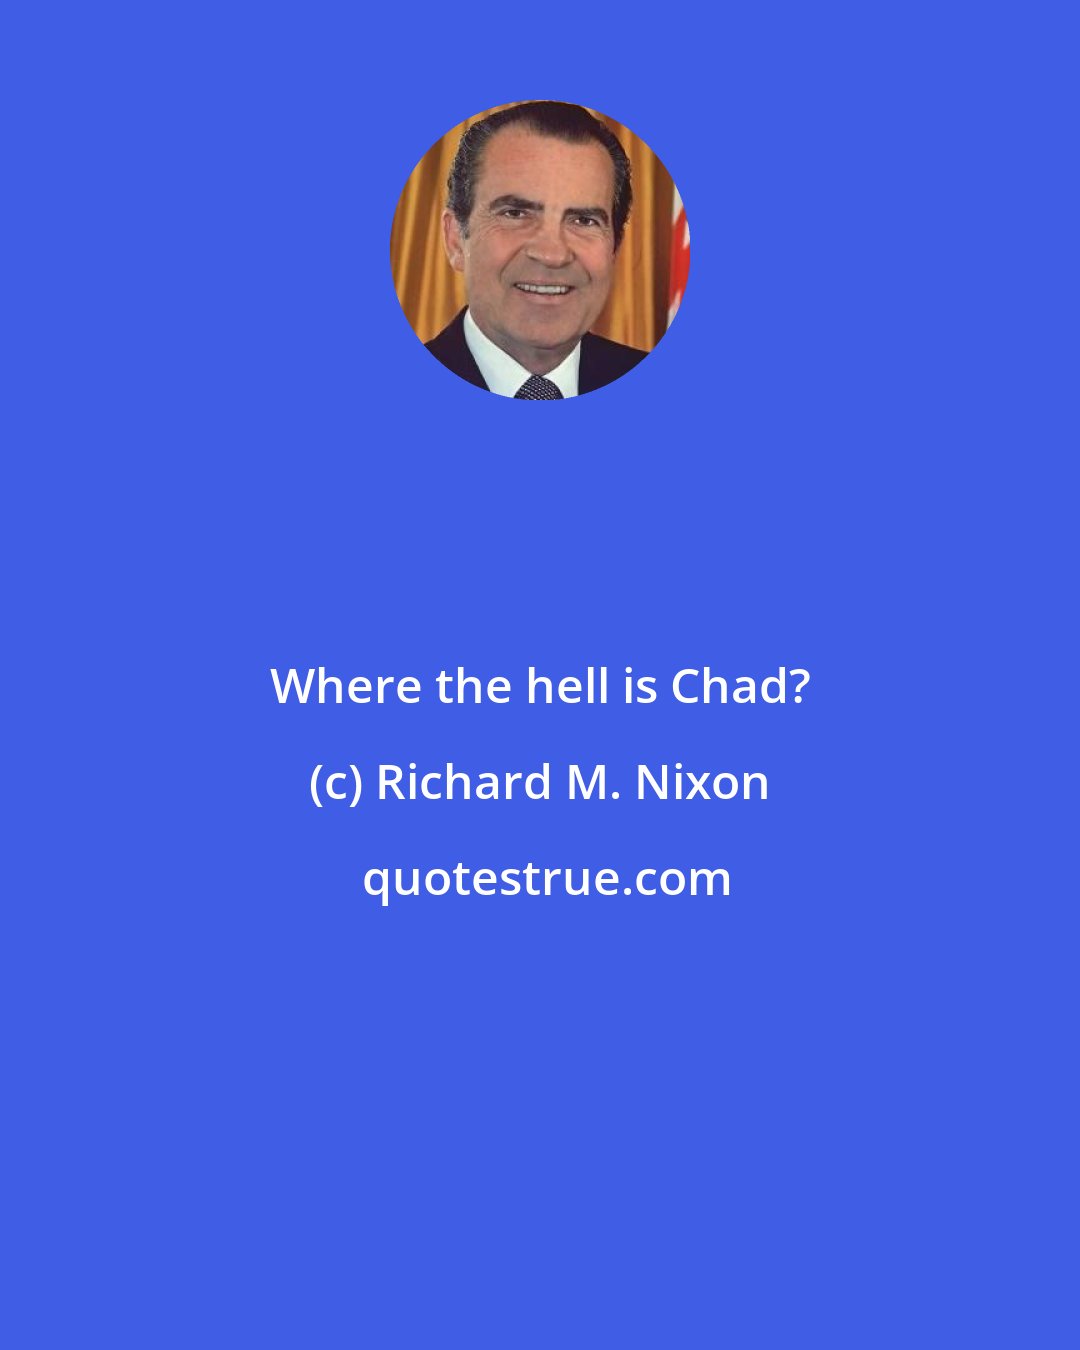 Richard M. Nixon: Where the hell is Chad?